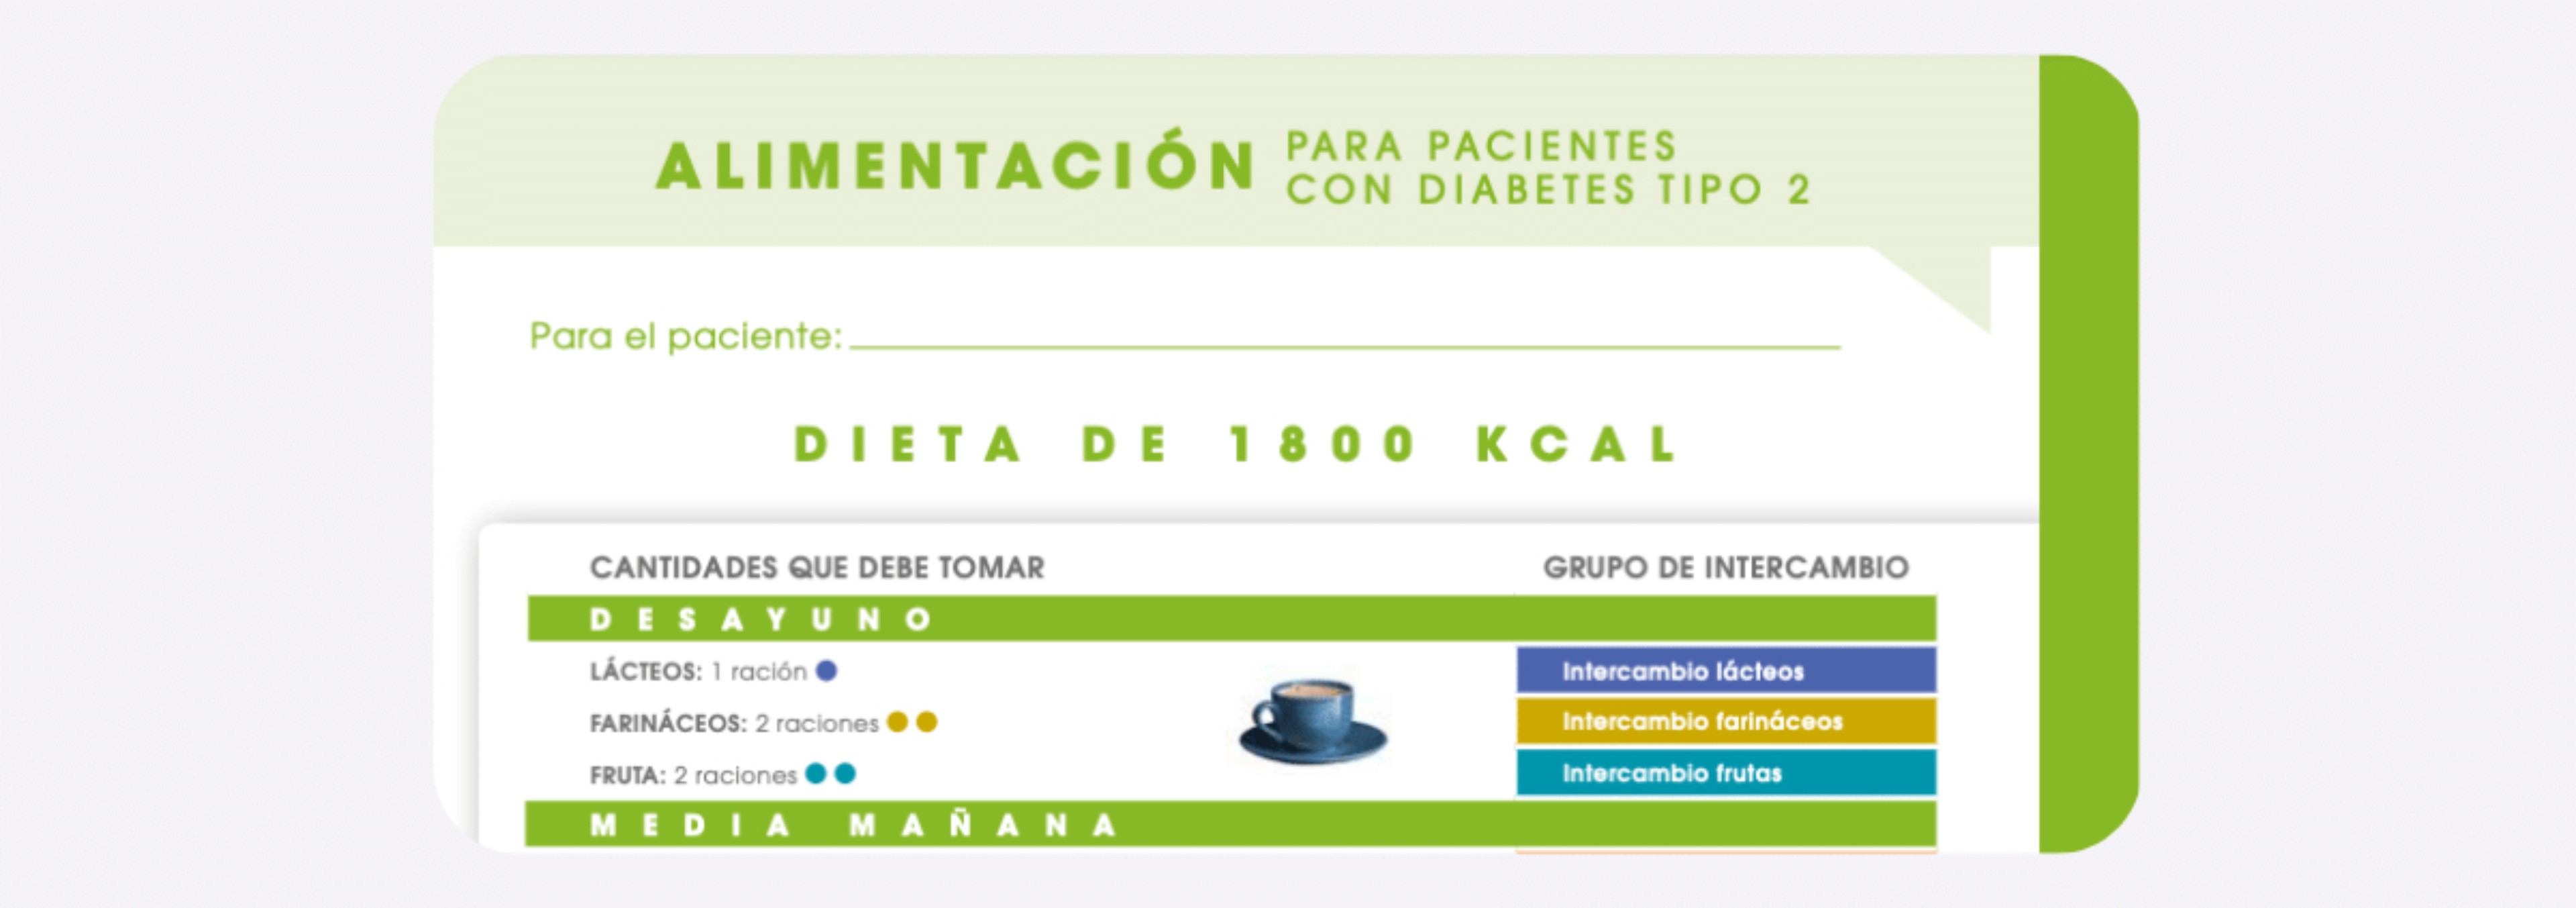 Dieta 1800 kcal para pacientes con diabetes (español)